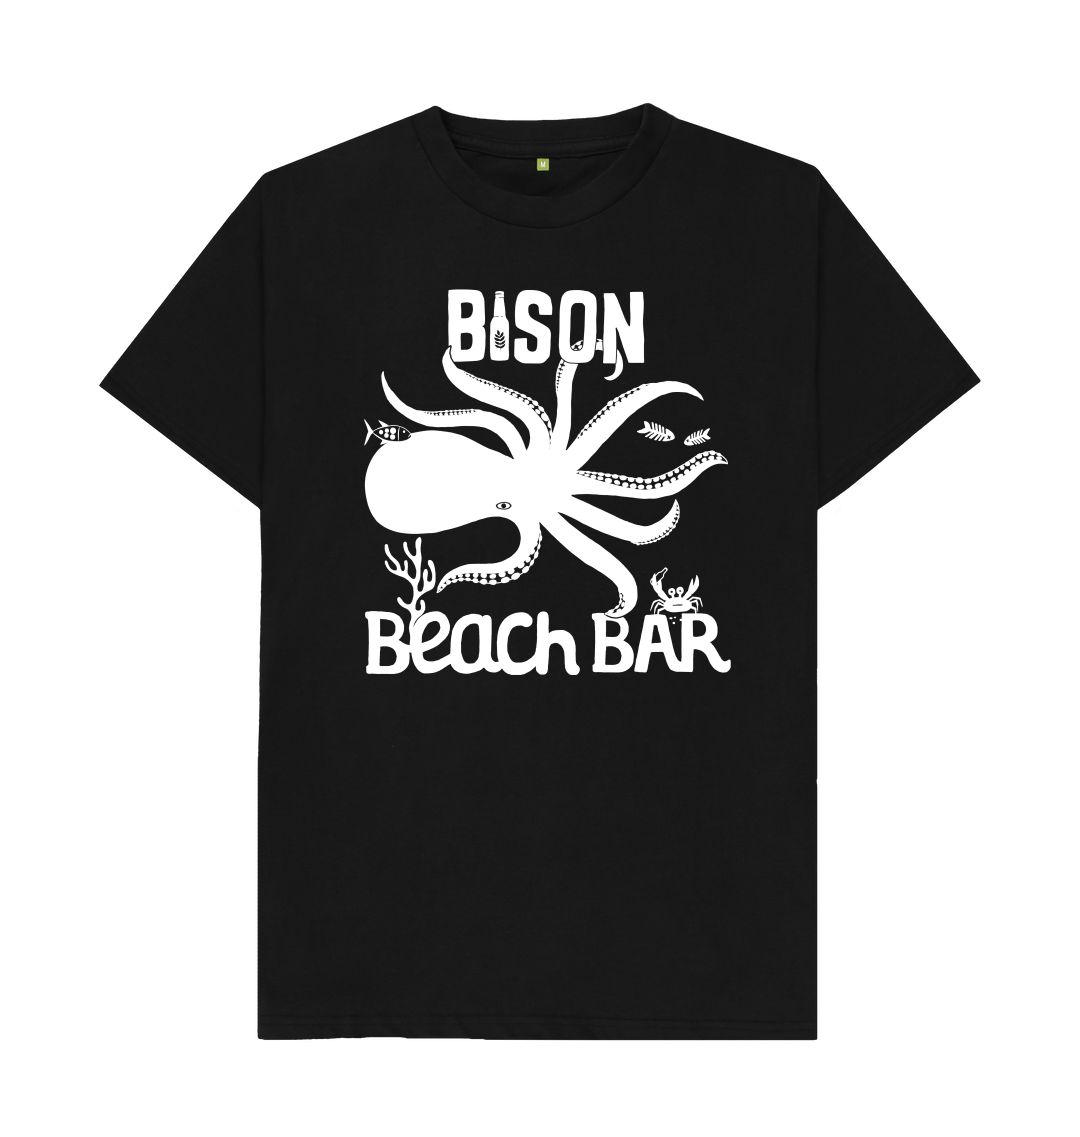 Black Bison Beach Bar Tee